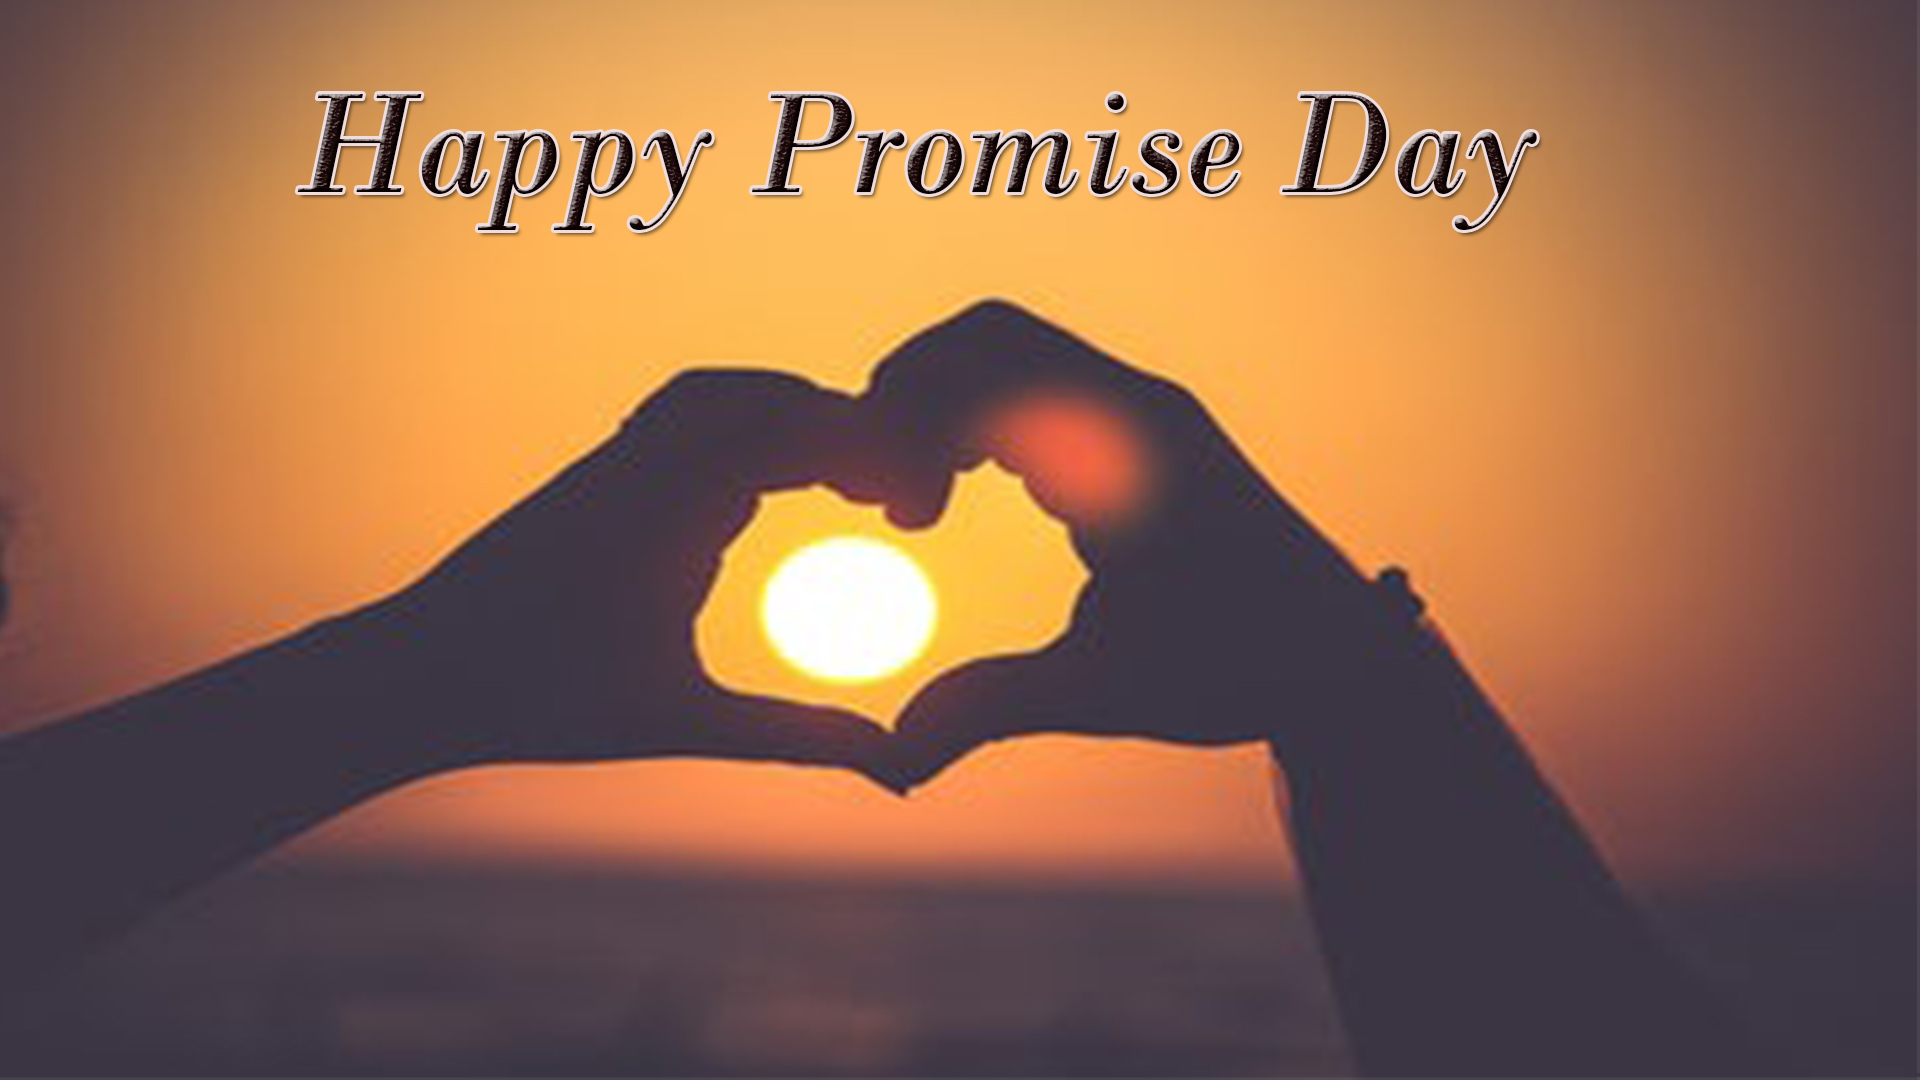 happy promise day 2018 image